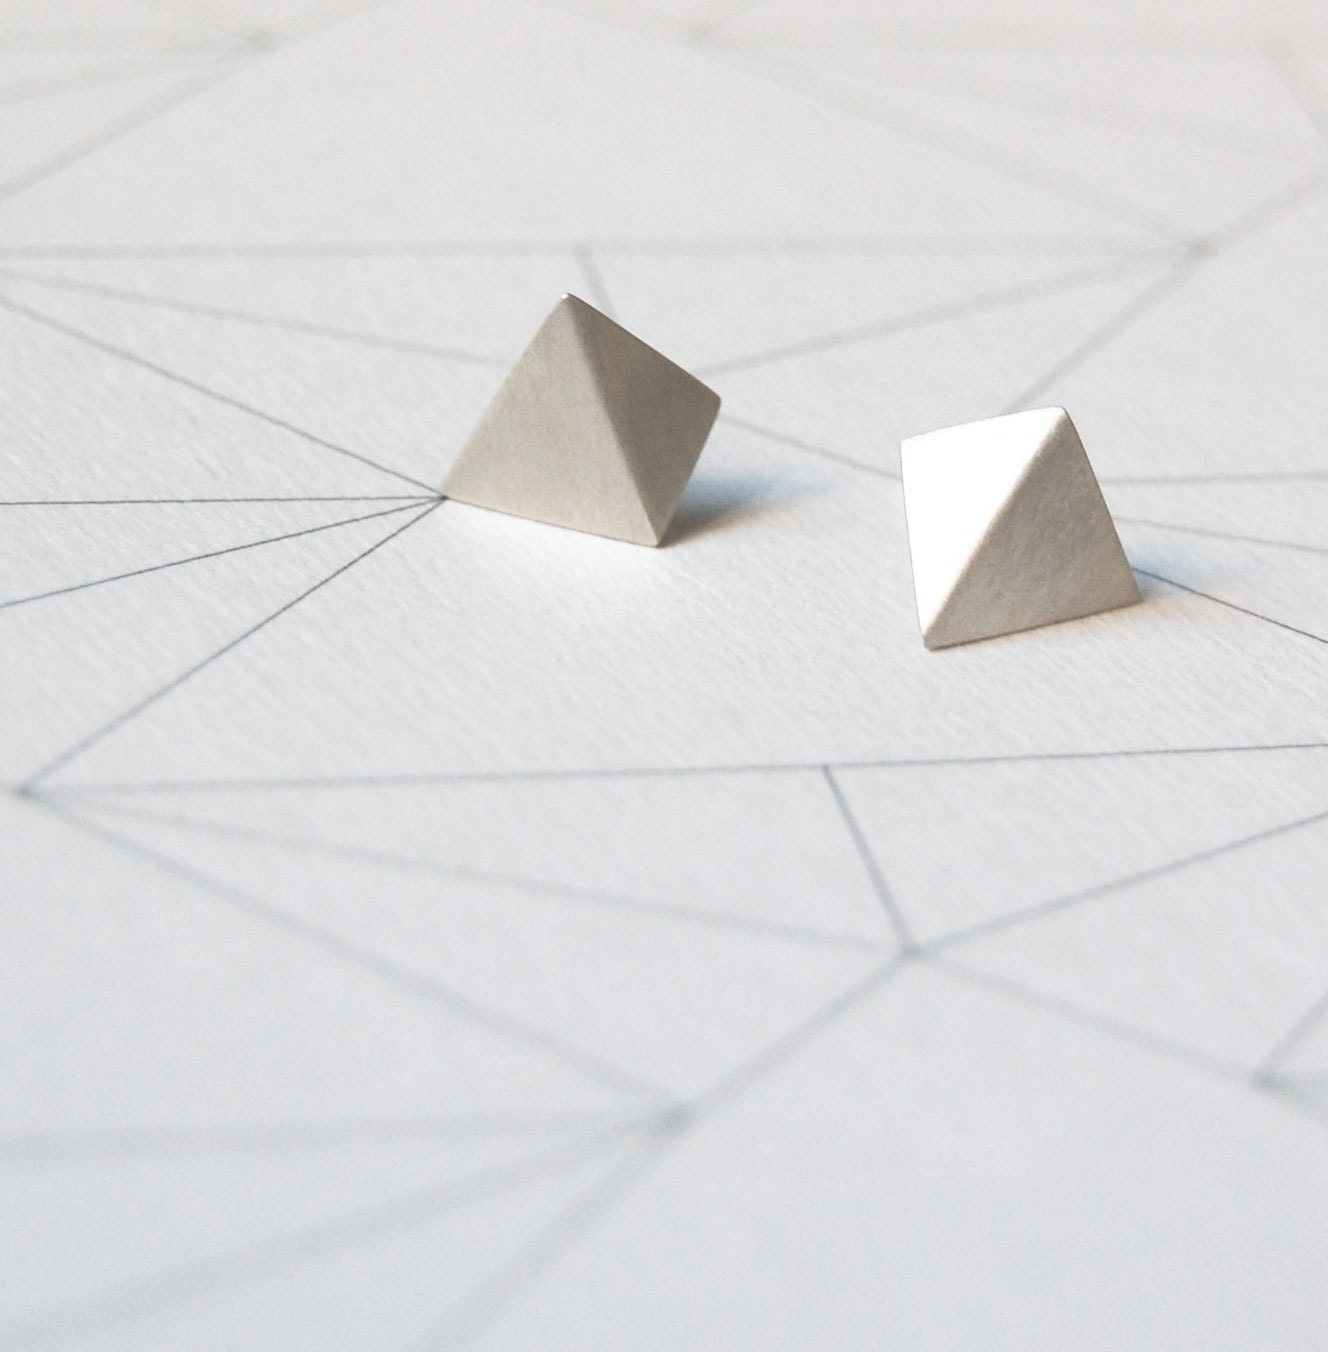 Sterling silver geometrics earrings "Les gÃ©omÃ©triques" Nro 4 - AgJc